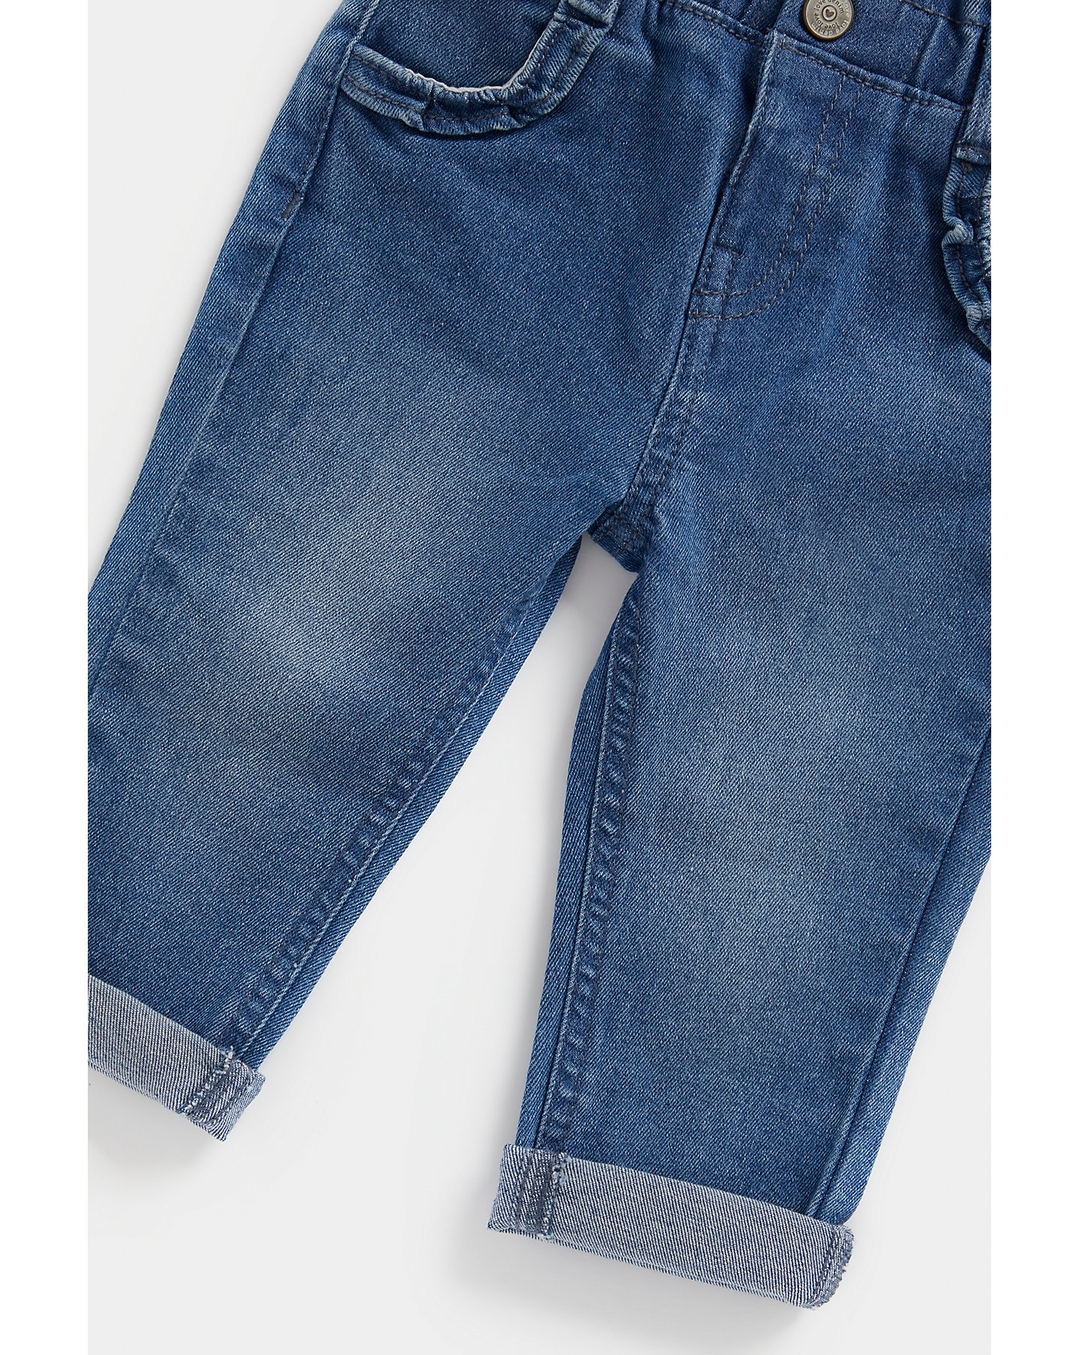 Buy TALES & STORIES Solid Cotton Blend Boyfriend Fit Girls Jeans | Shoppers  Stop